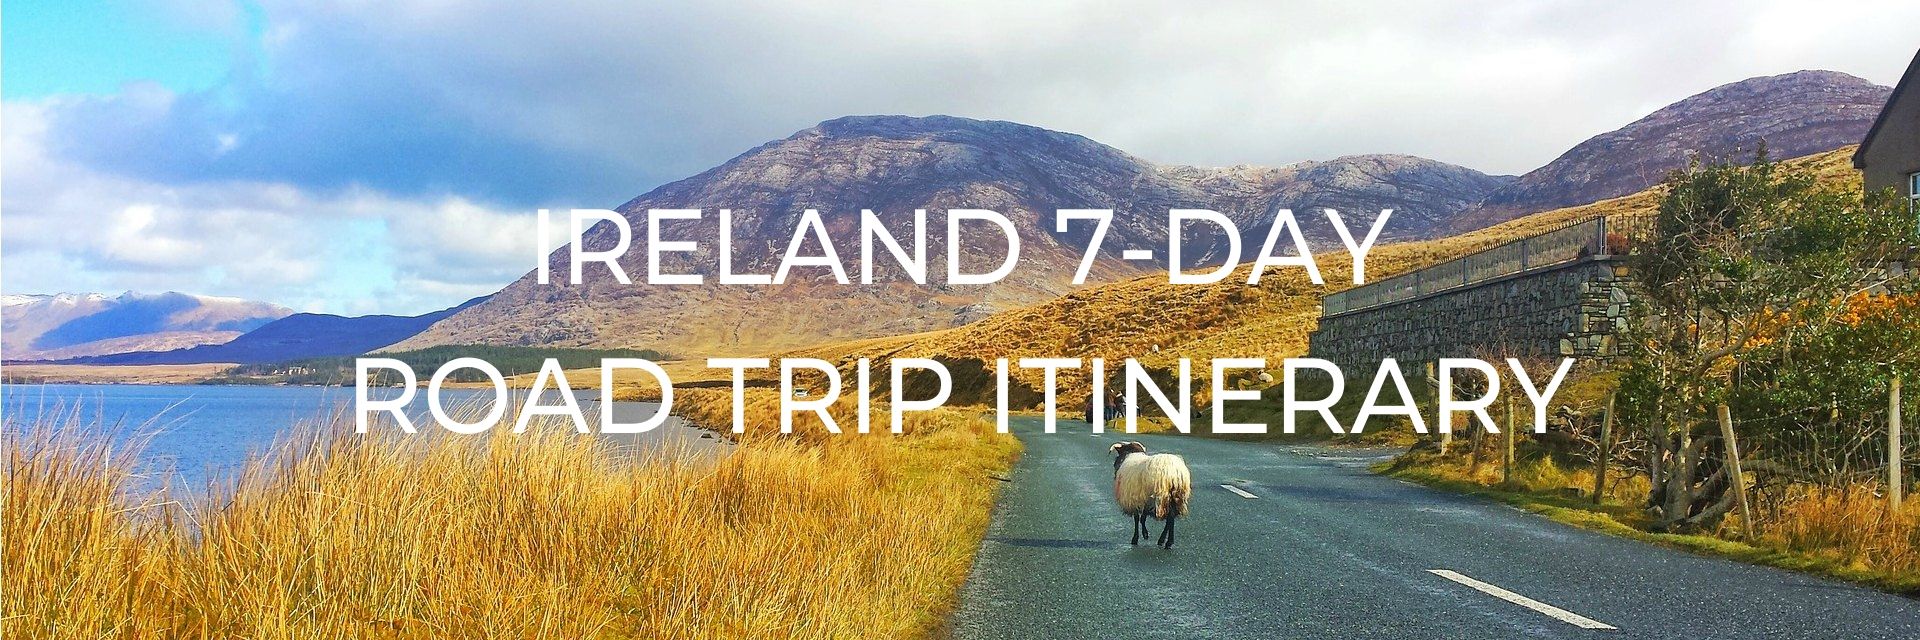 Ireland Road Trip Itinerary Desktop Header Image